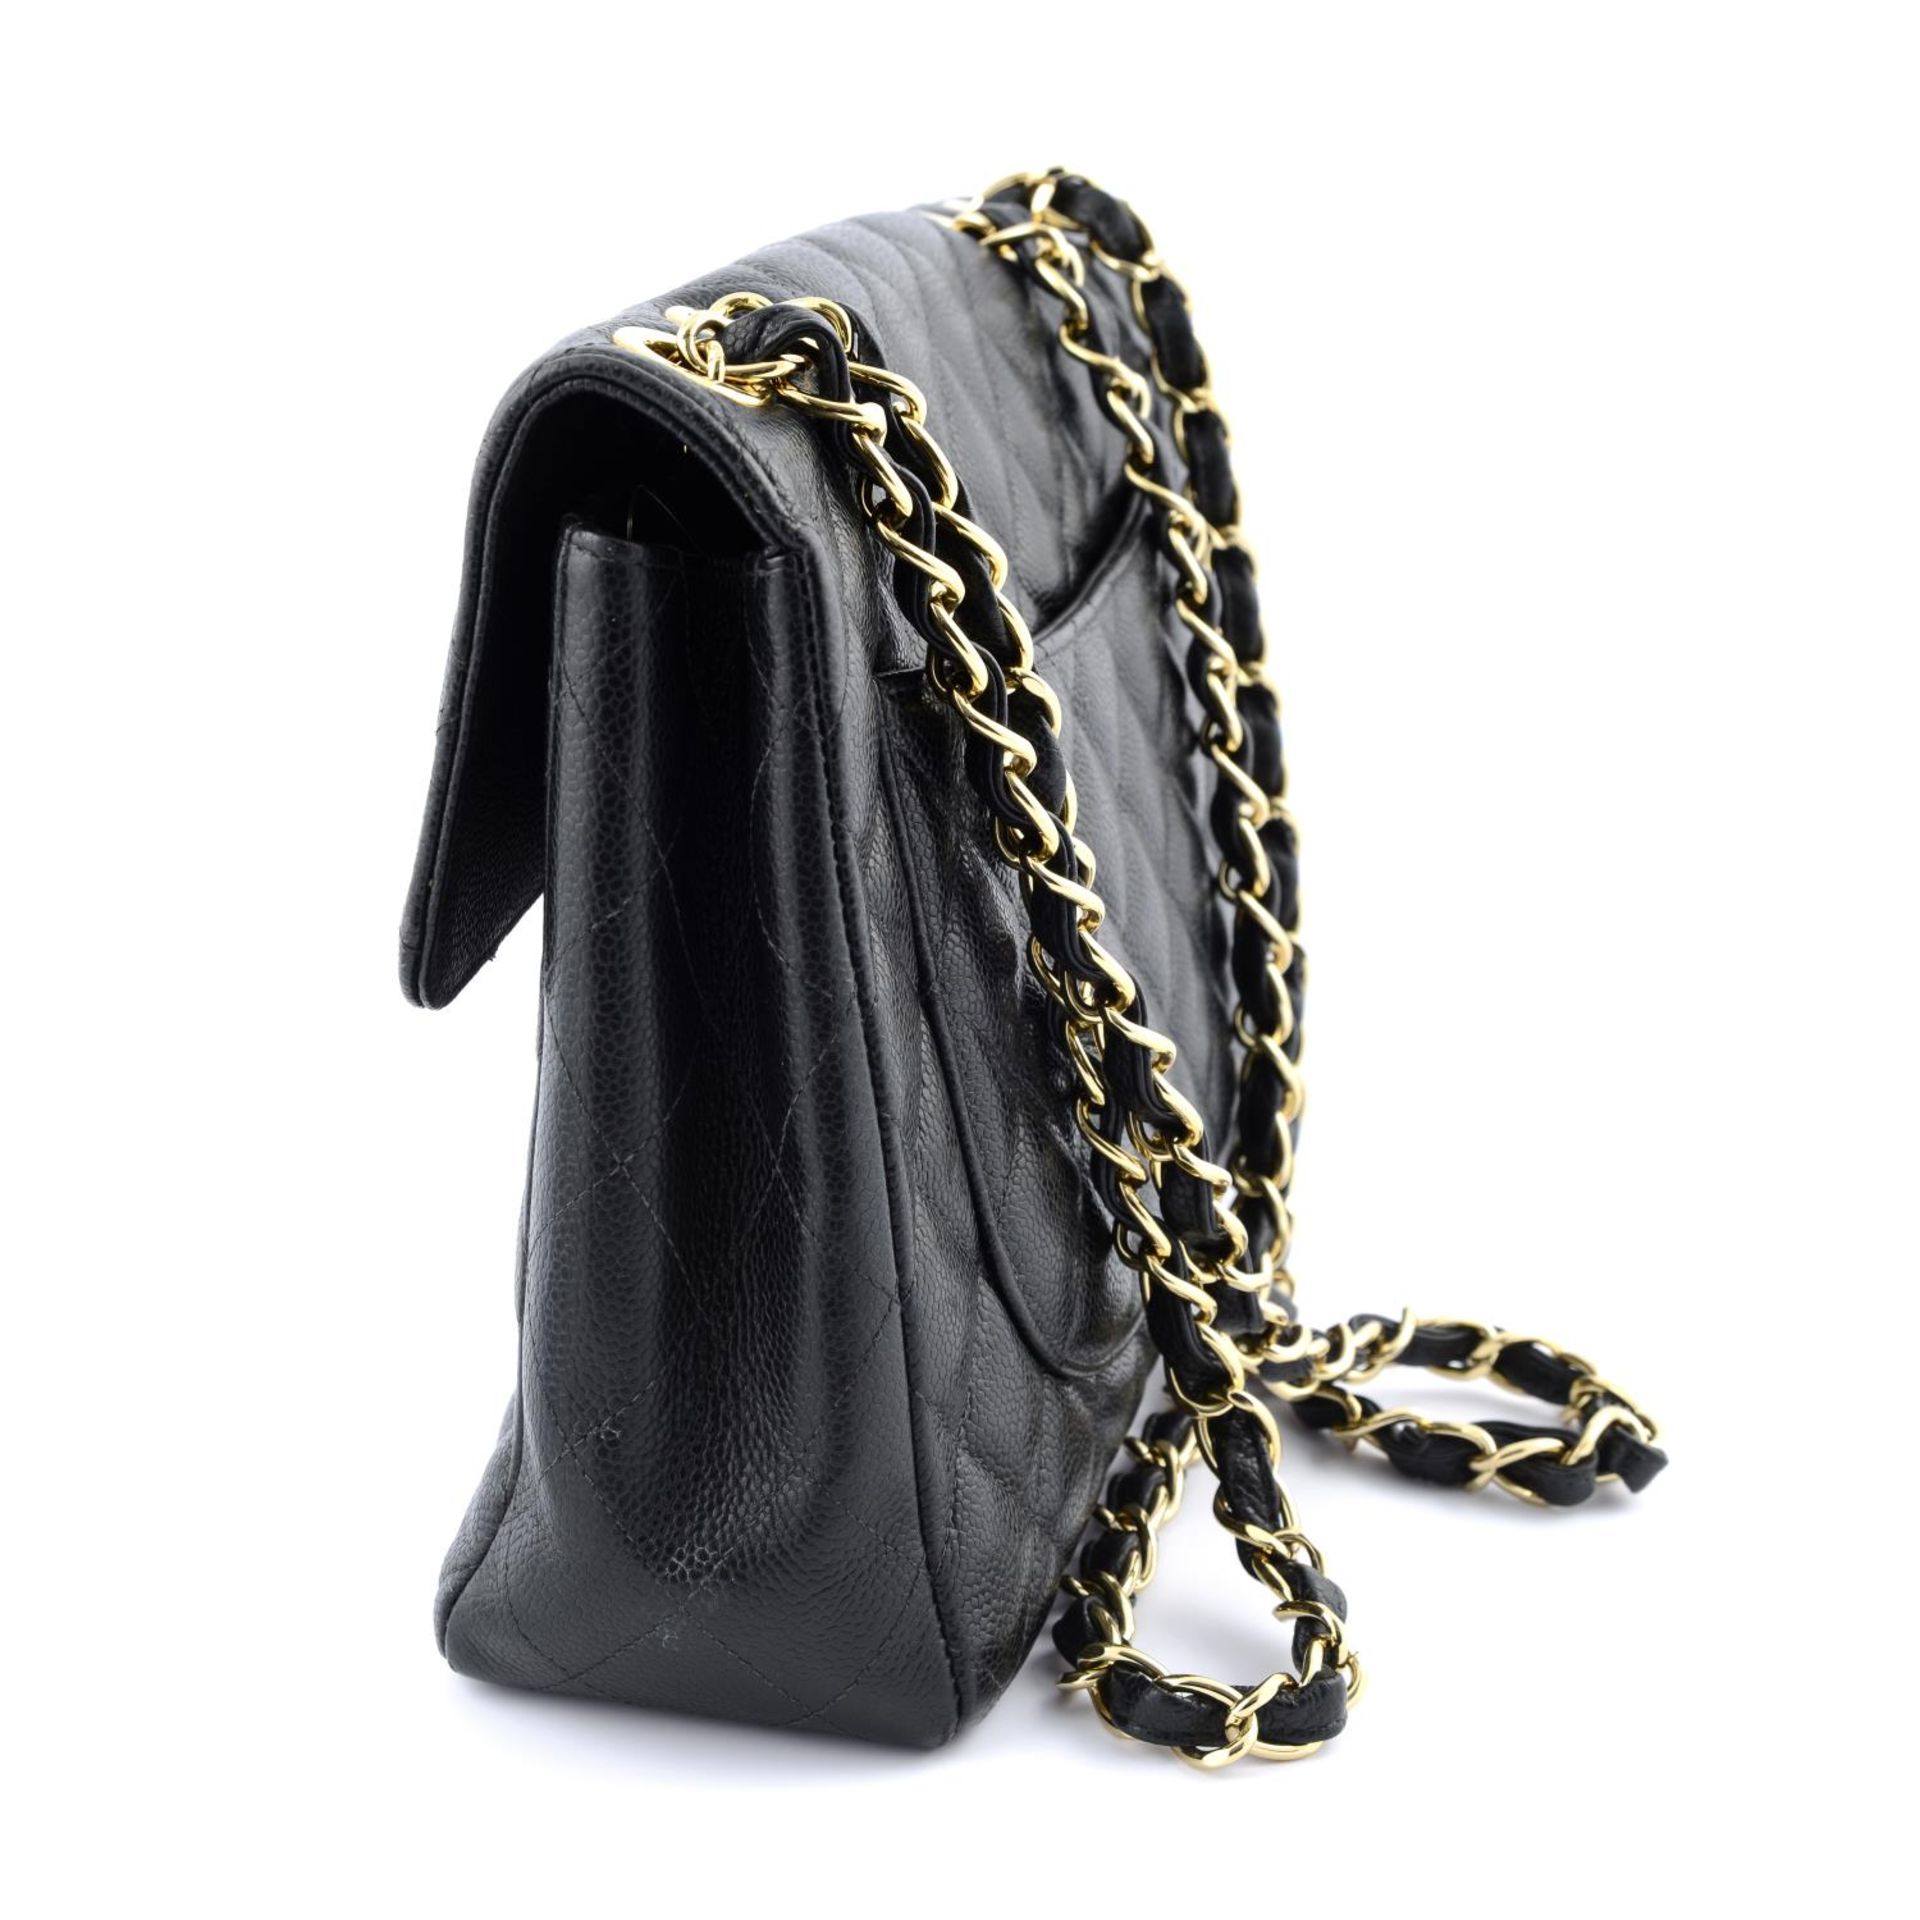 CHANEL - a Jumbo Caviar Classic Flap handbag. - Image 3 of 4